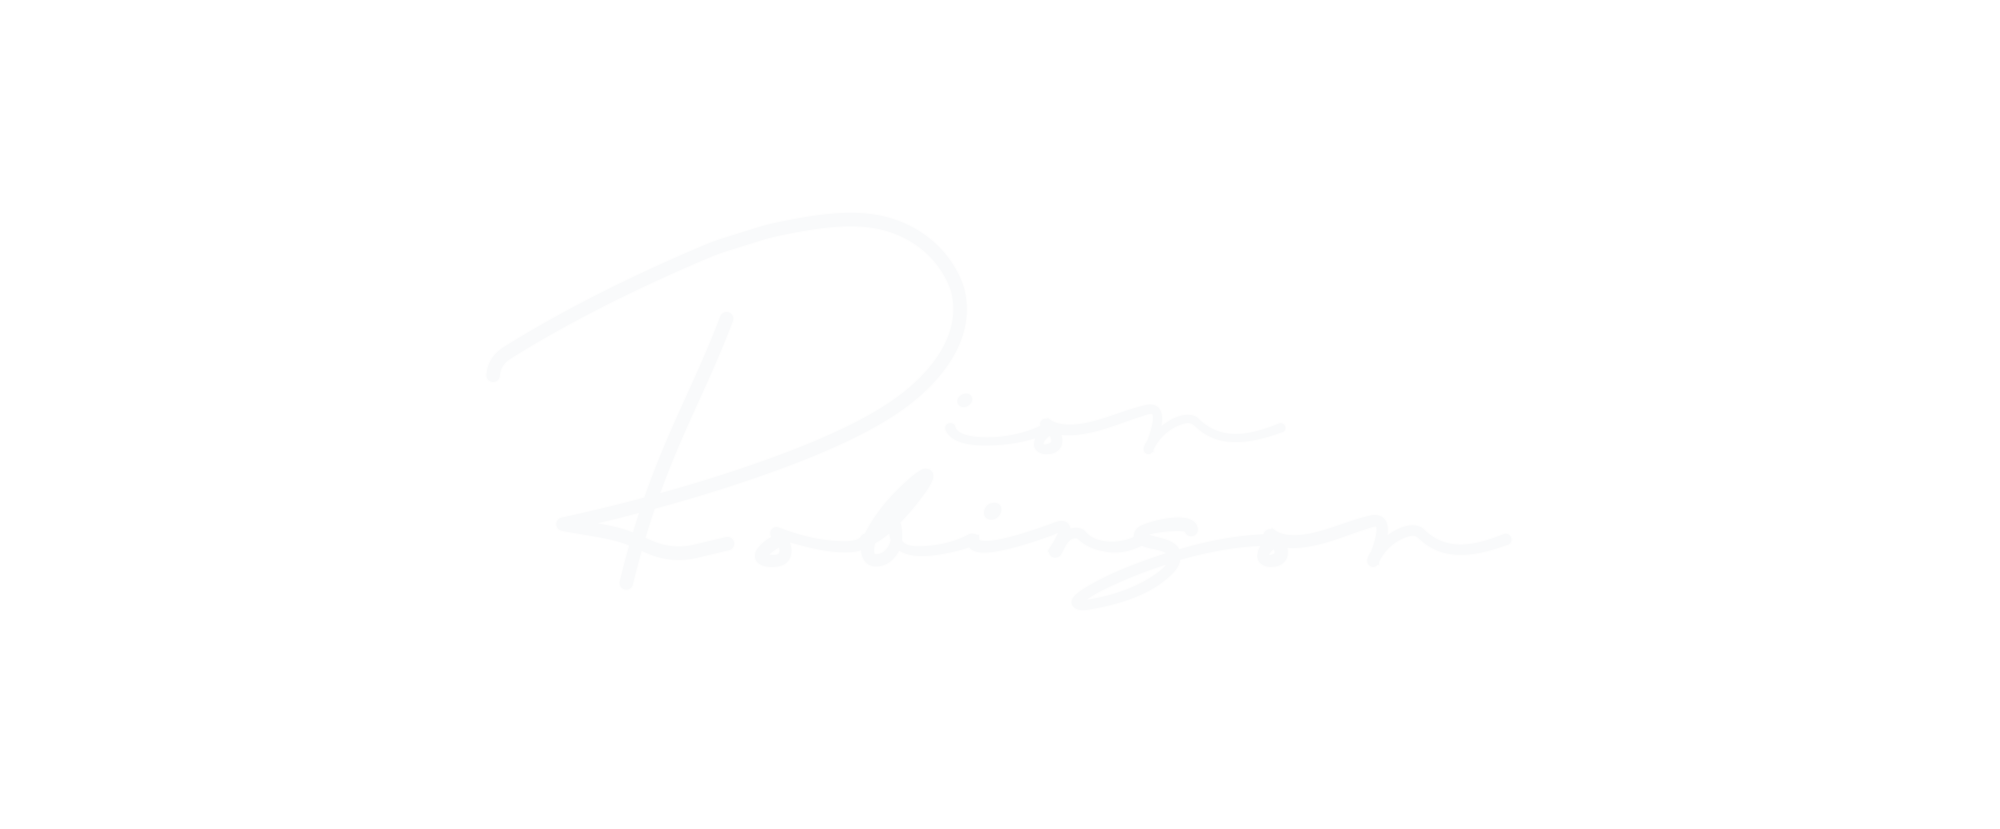 Rion Robinson